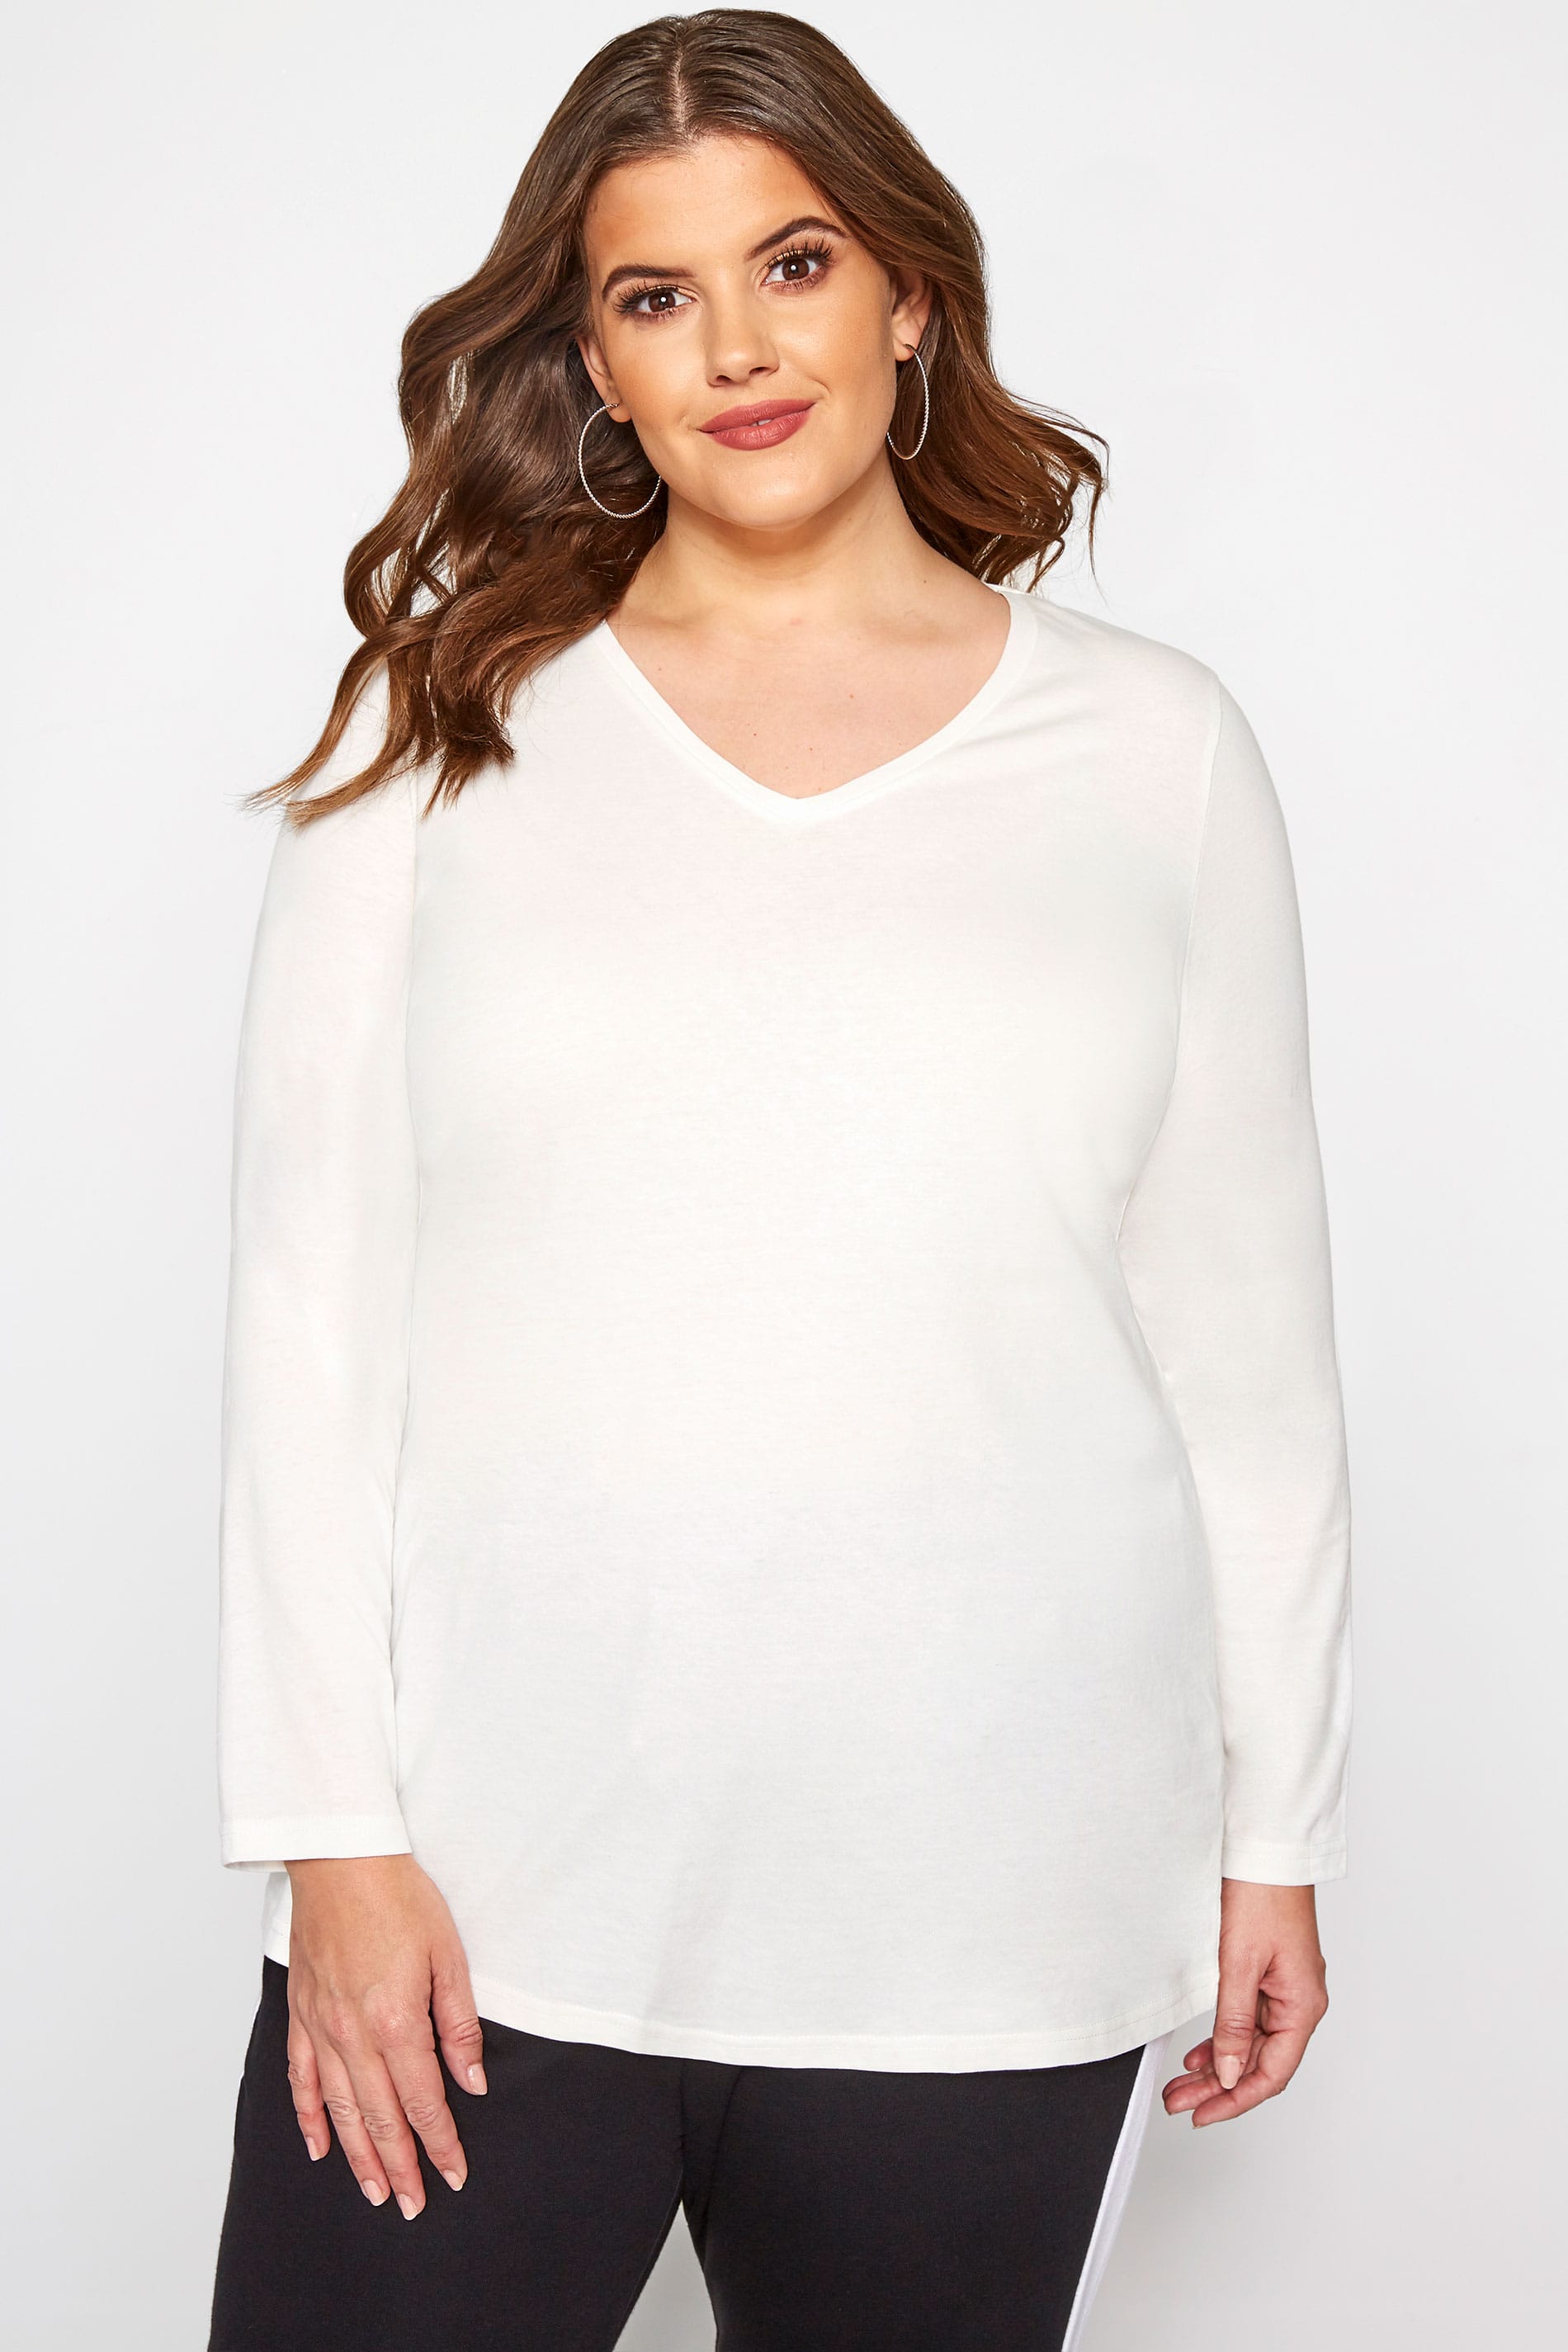 White V-Neck Long Sleeve Top | Sizes 16-36 | Yours Clothing